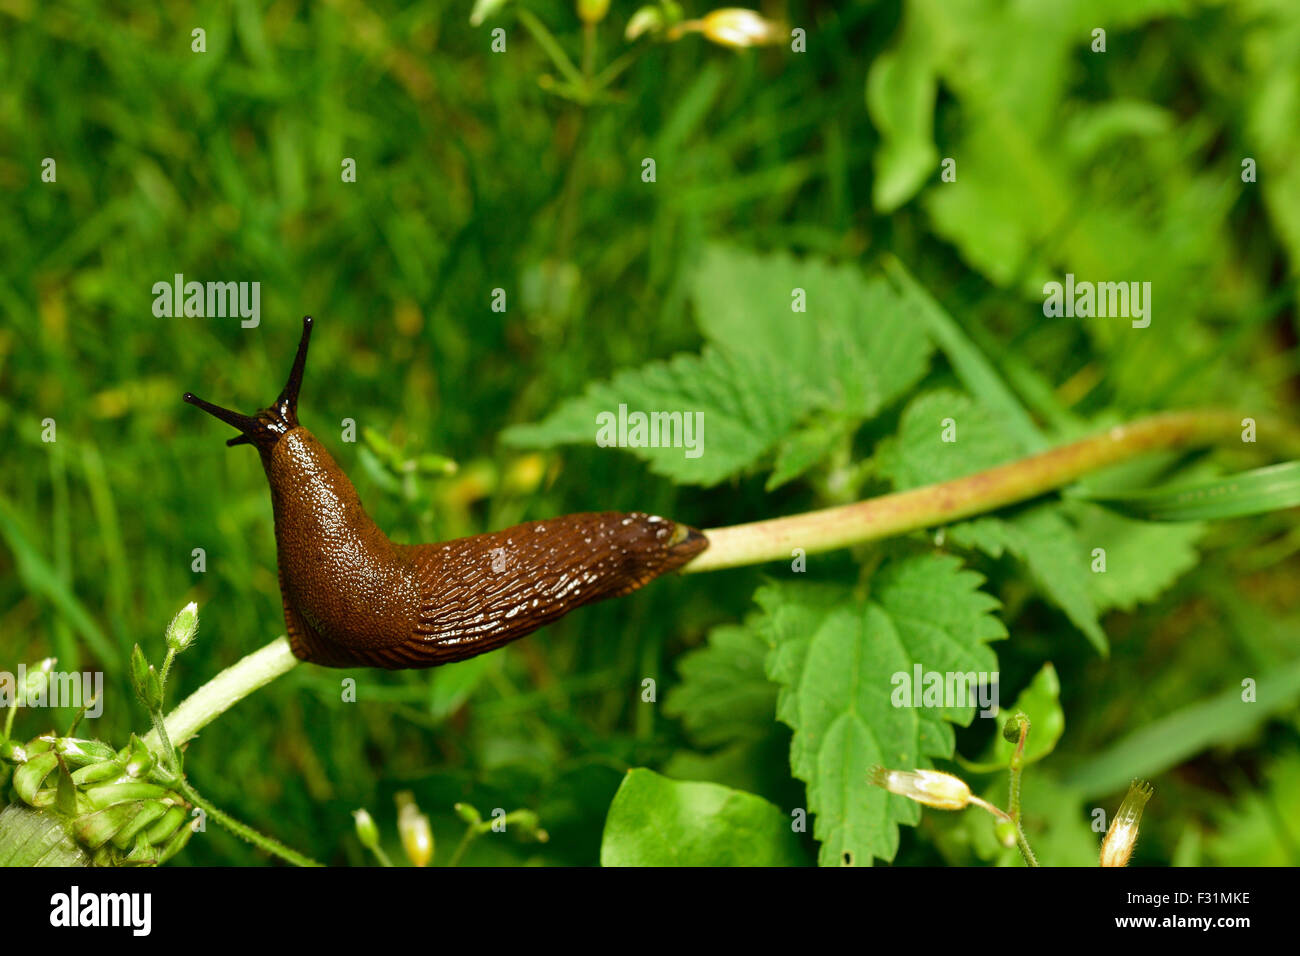 Spanish slug (Arion vulgaris) invasion in garden. Invasive slug. Garden problem. Europe. Stock Photo